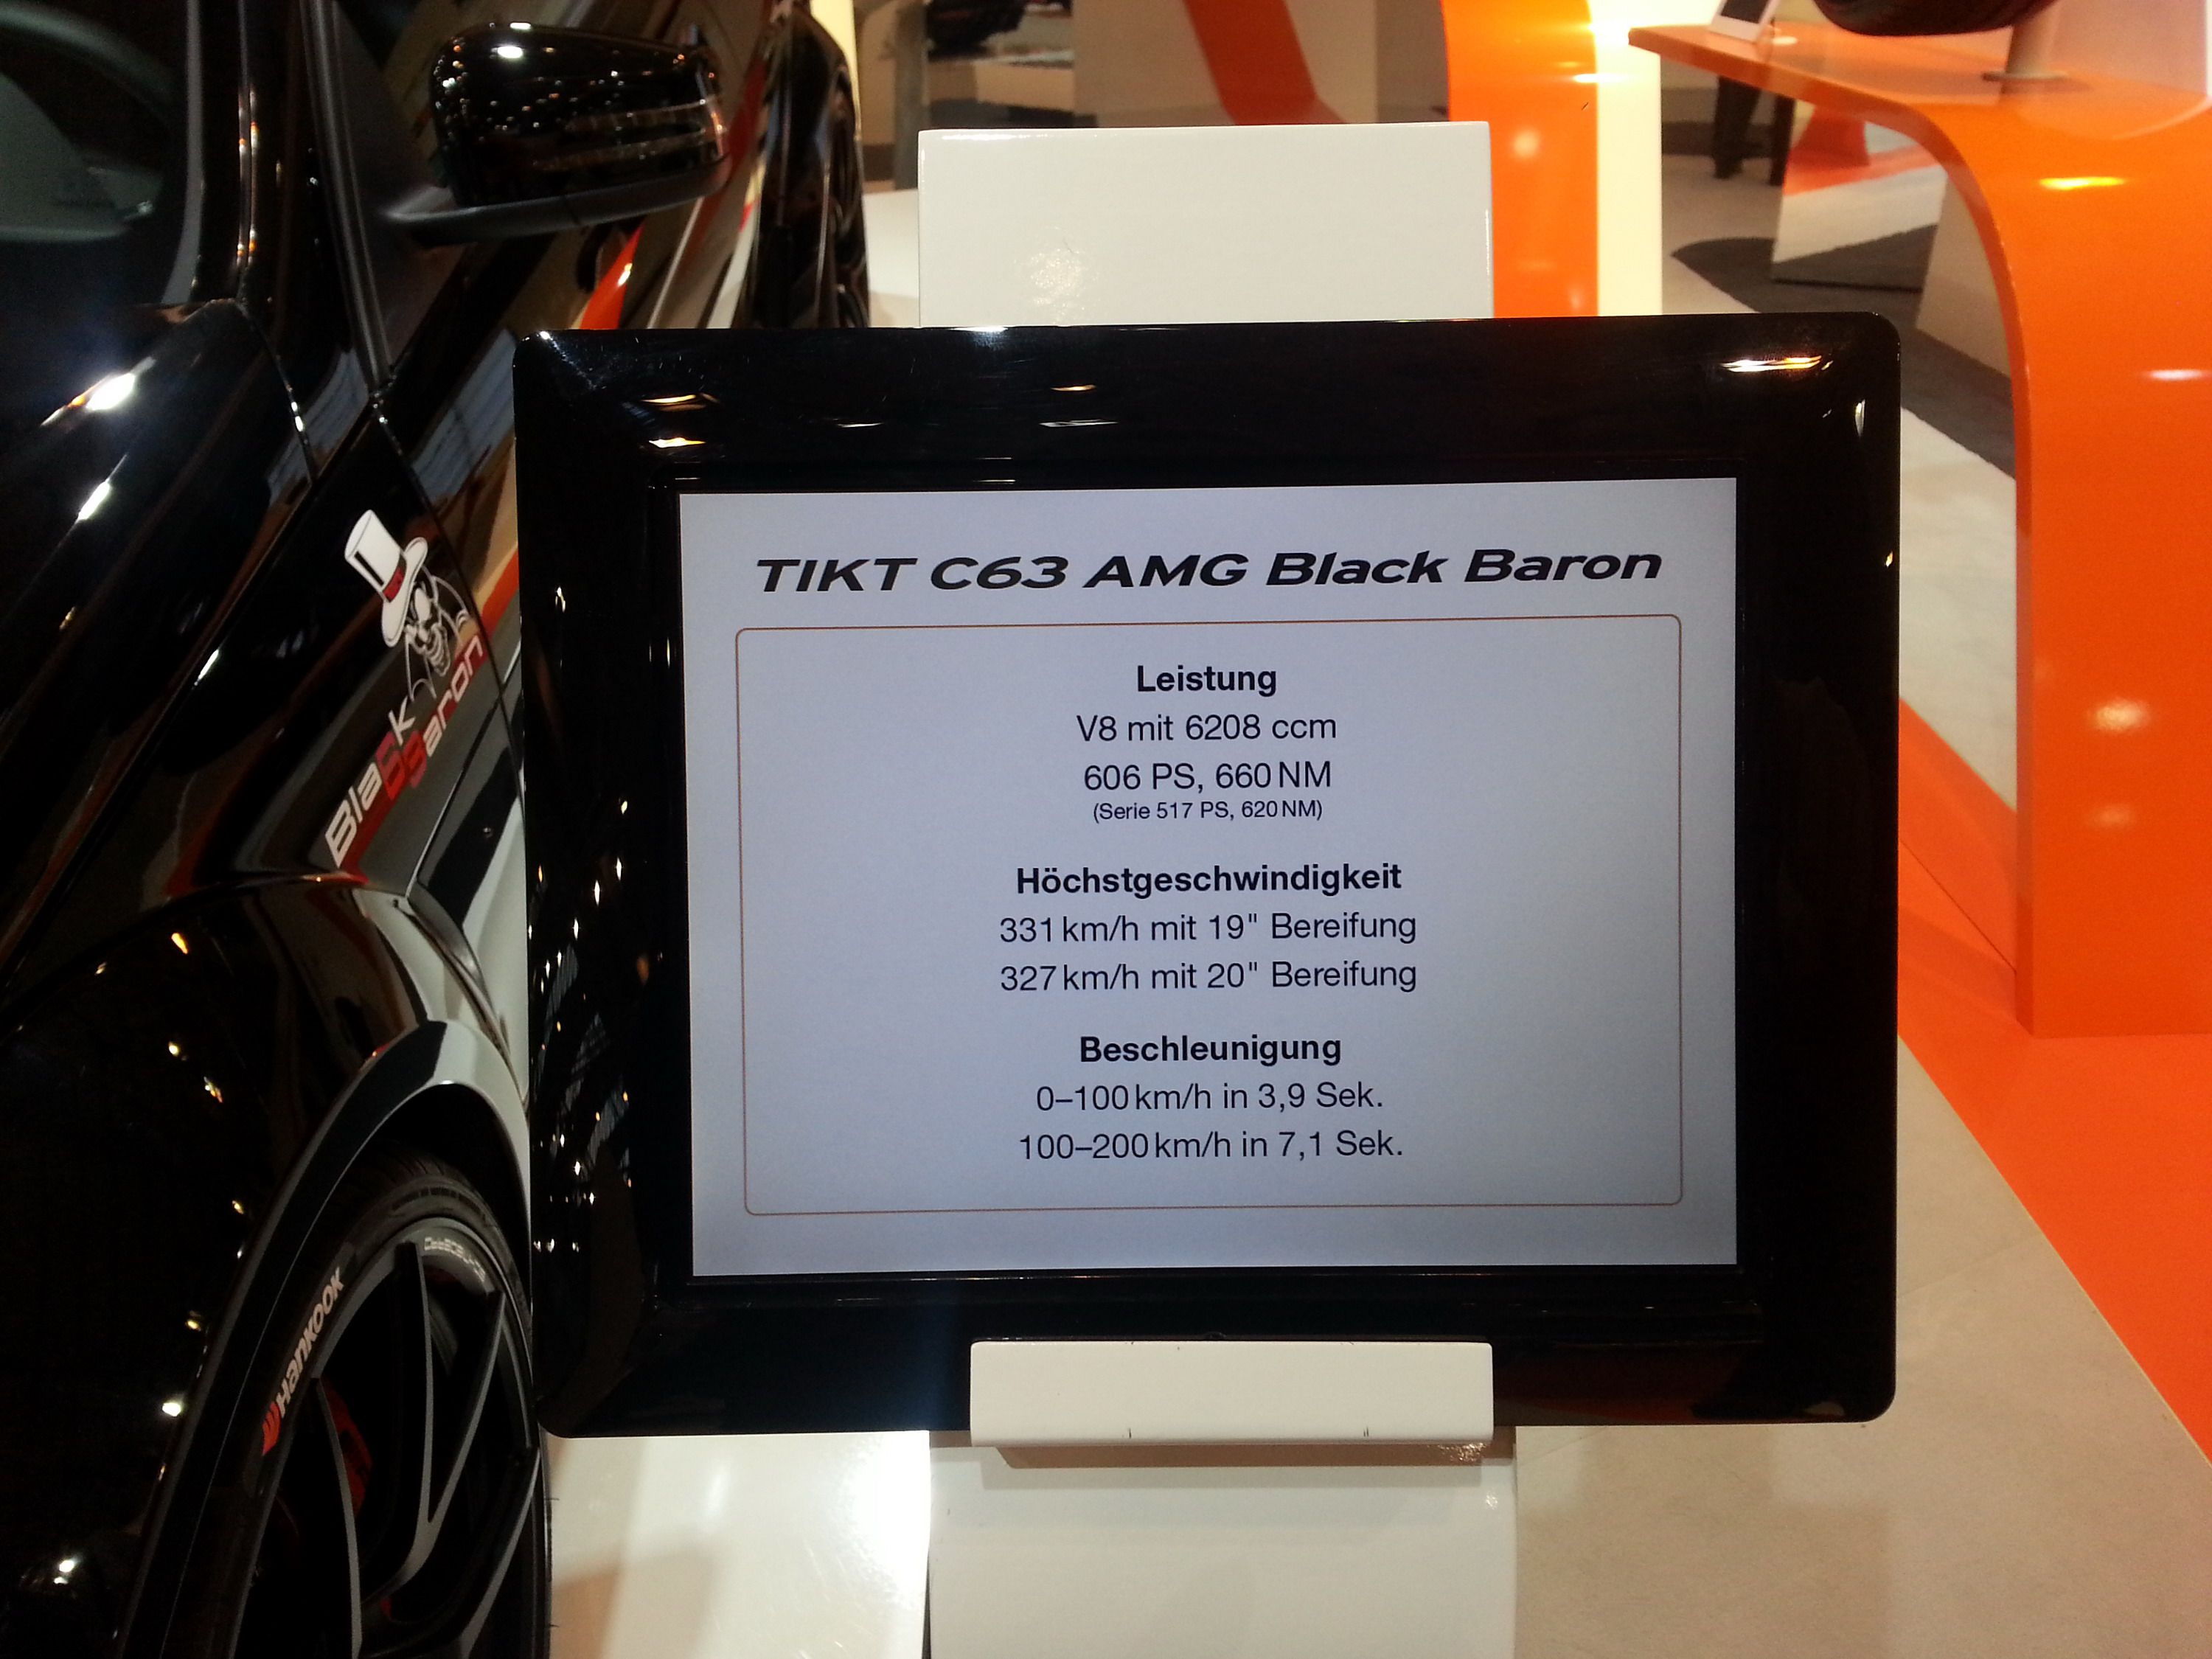 2013 Mercedes-Benz C63 AMG Black Baron by Tikt